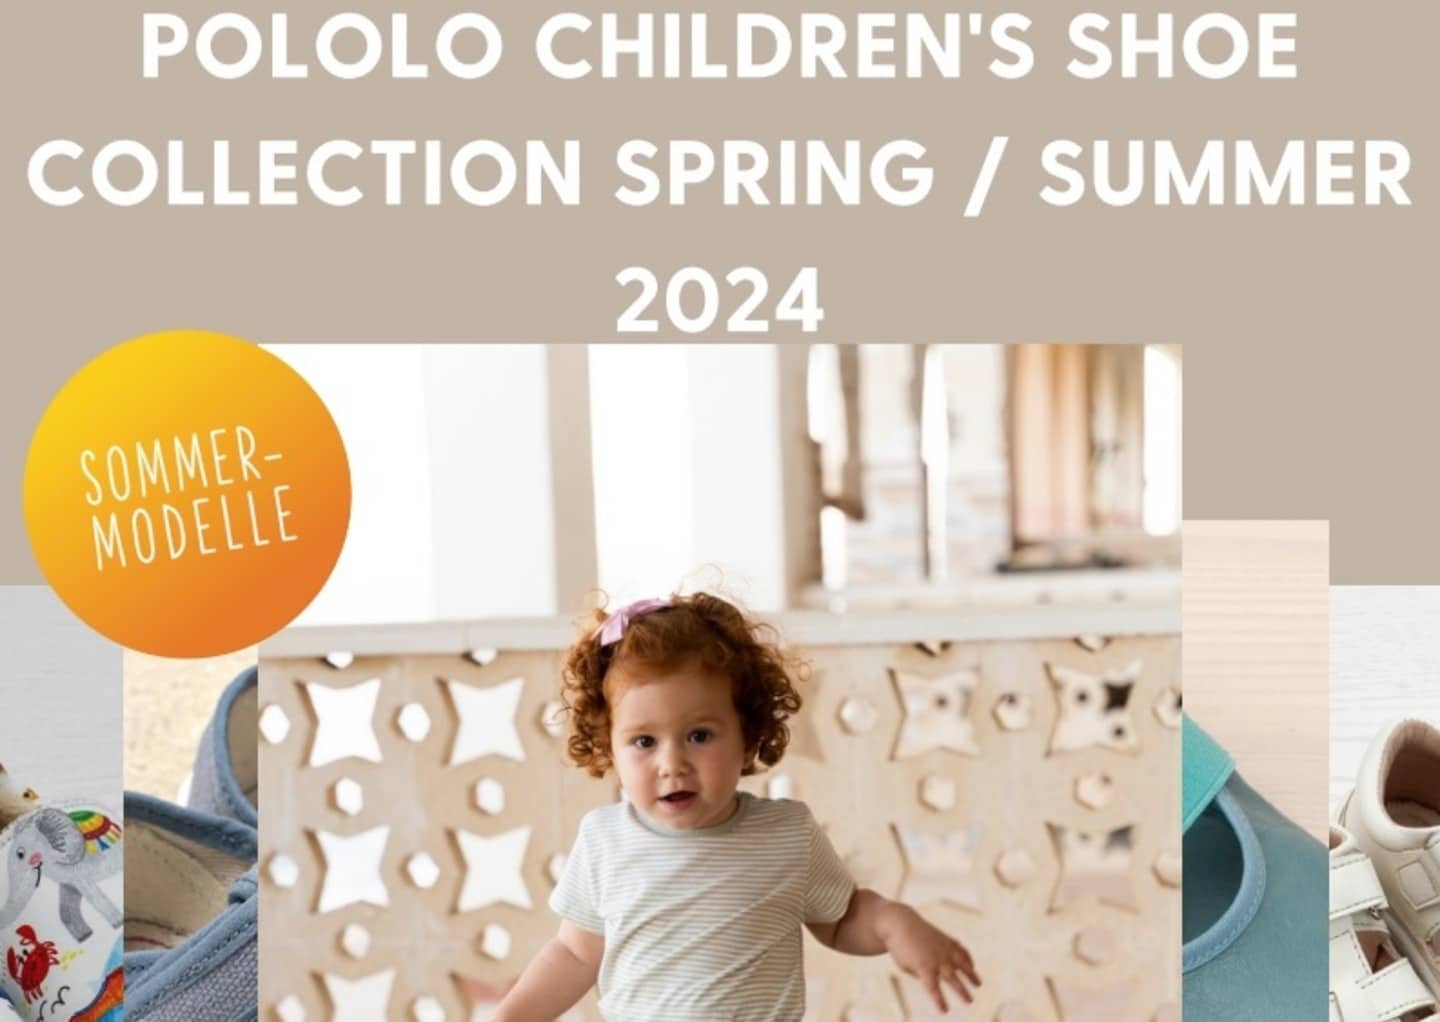 Deckblatt-Pololo-Childrens-Shoe-Collection-Spring-Summer-2024_english